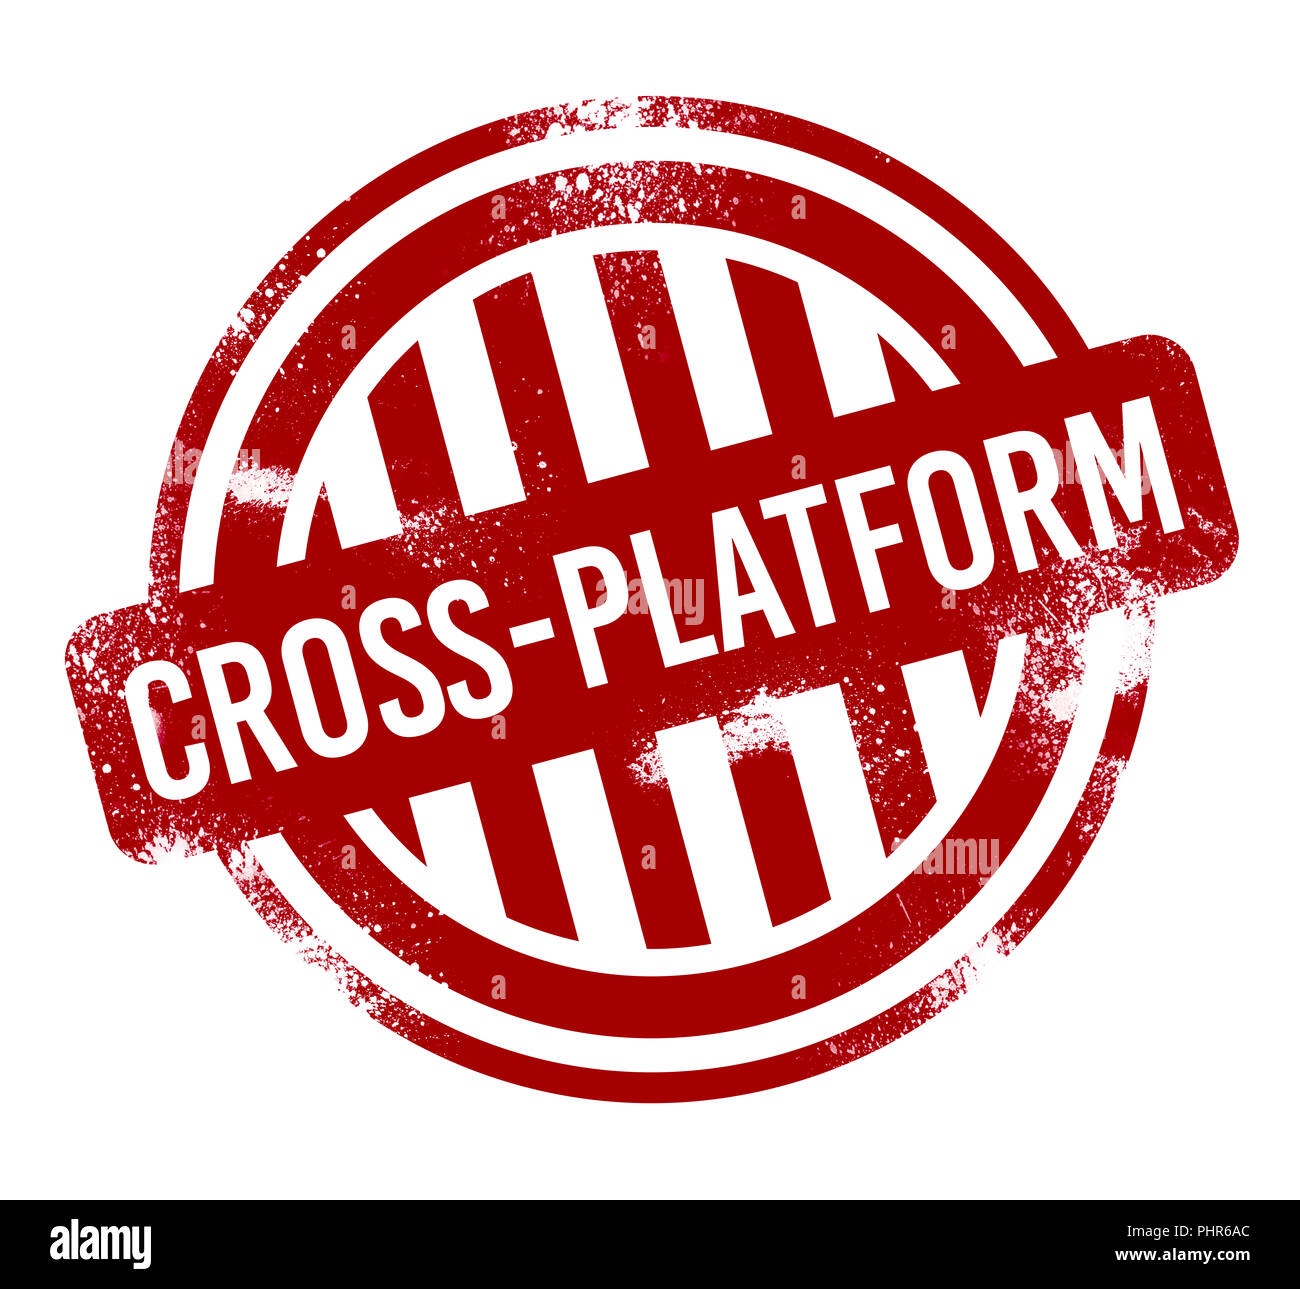 Cross-platform - rosso pulsante grunge, timbro Foto Stock